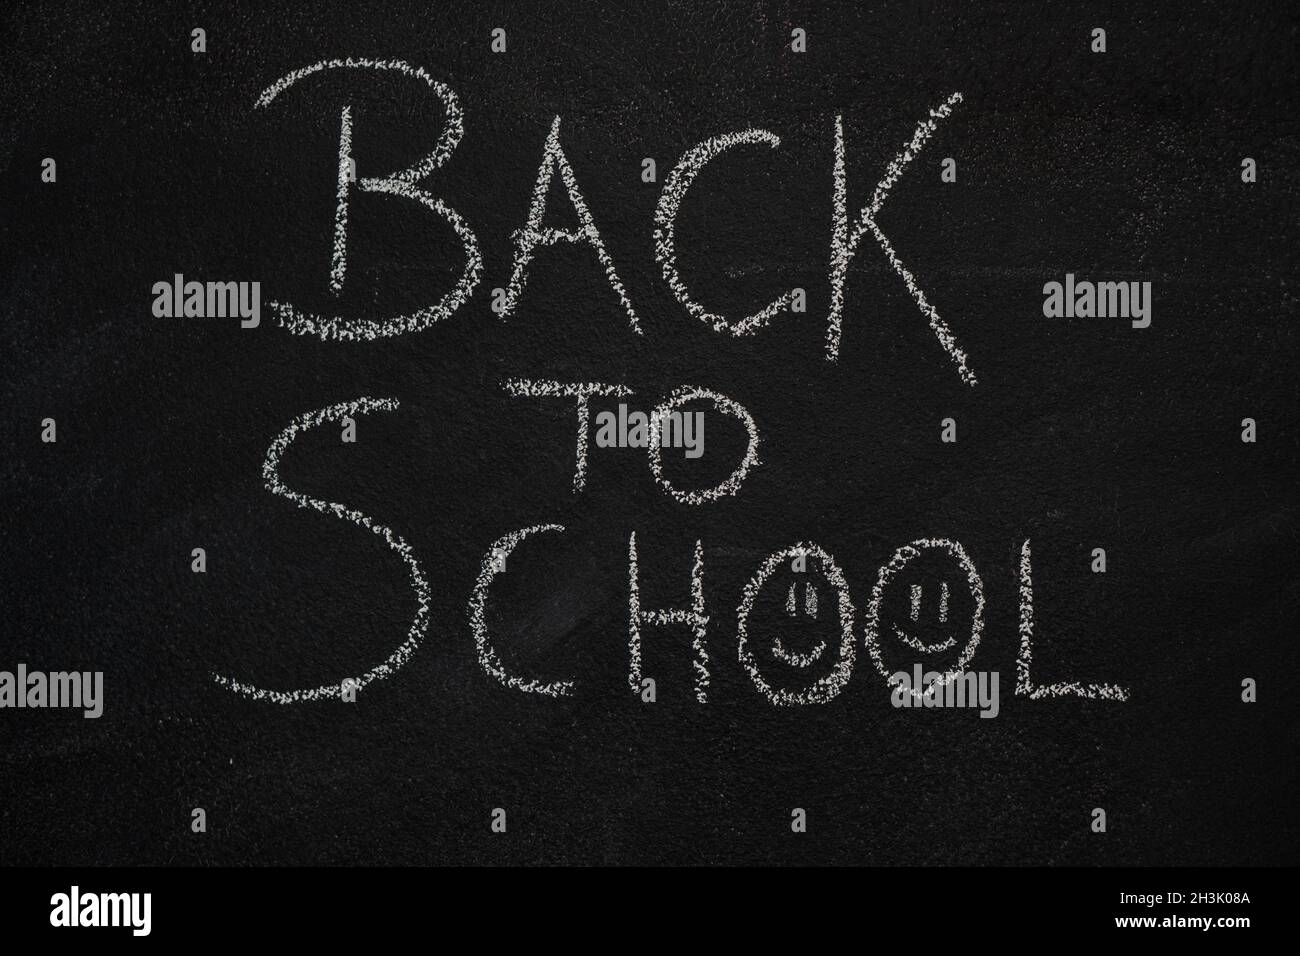 Back to school text on black chalkboard Stock Photo